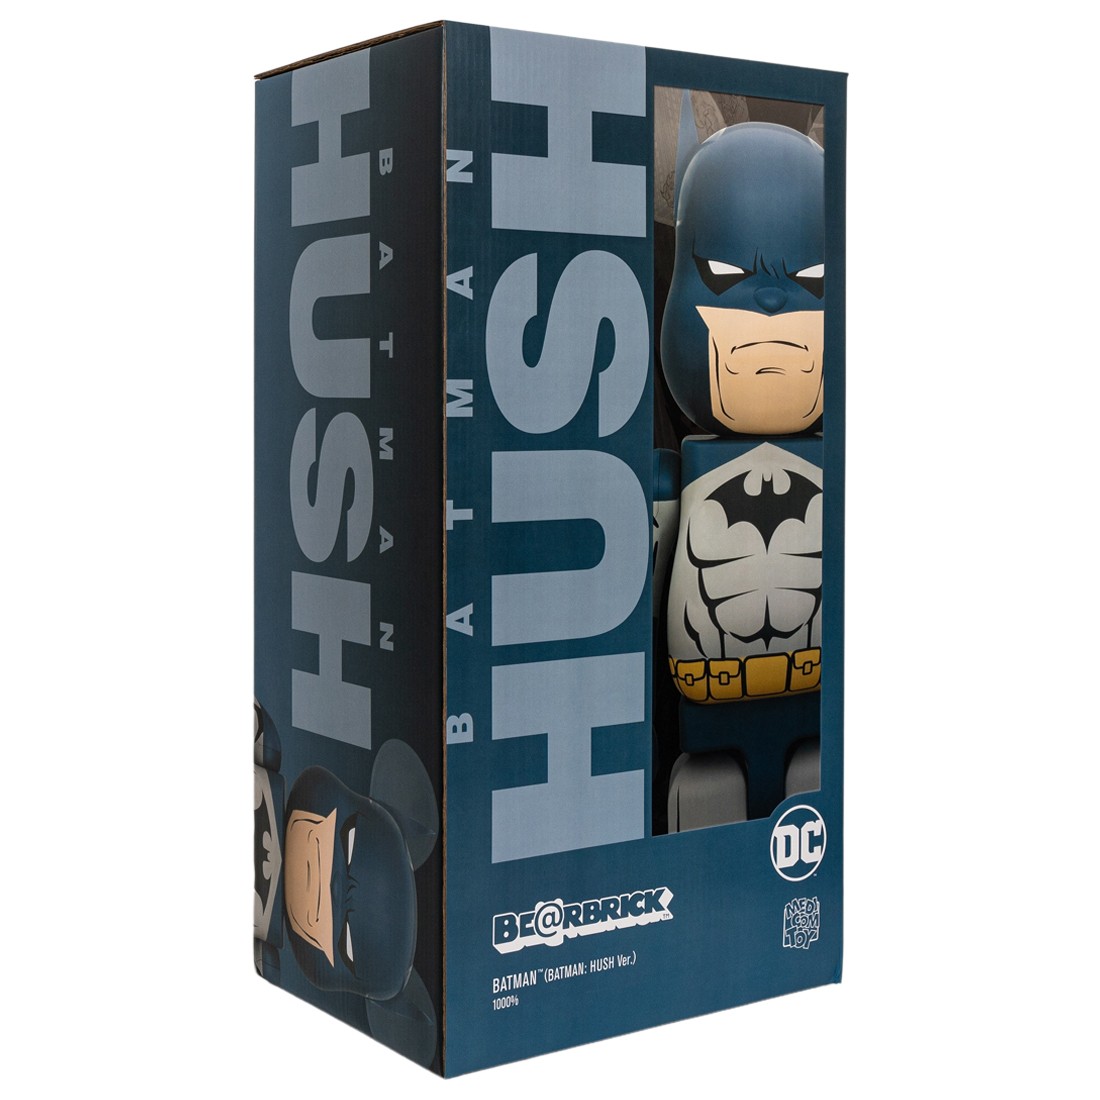 Medicom DC Batman Hush Version 1000% Bearbrick Figure (blue)